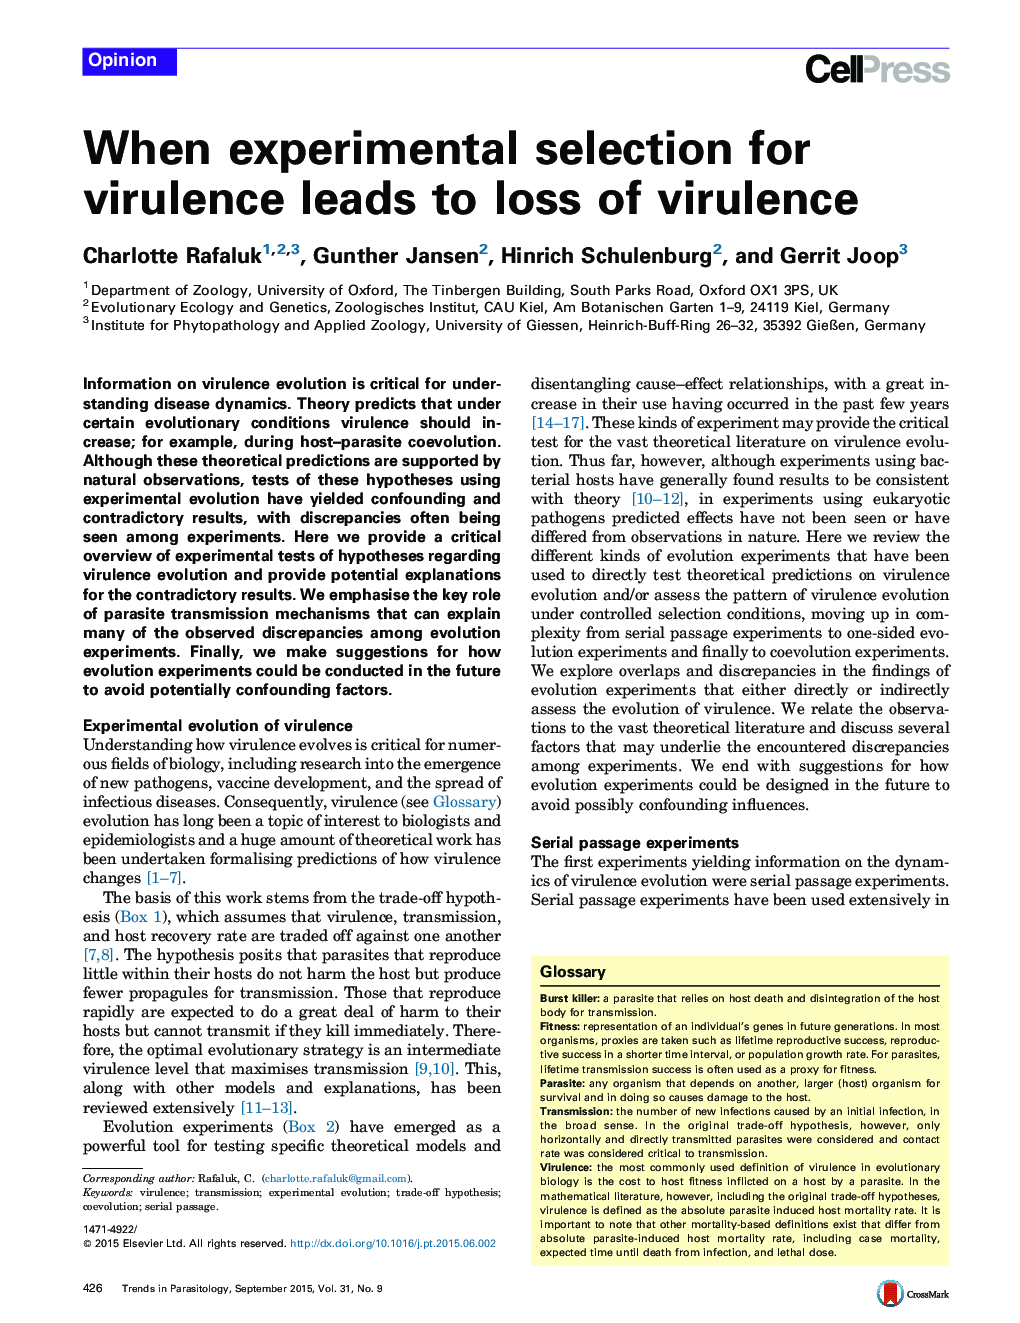 When experimental selection for virulence leads to loss of virulence